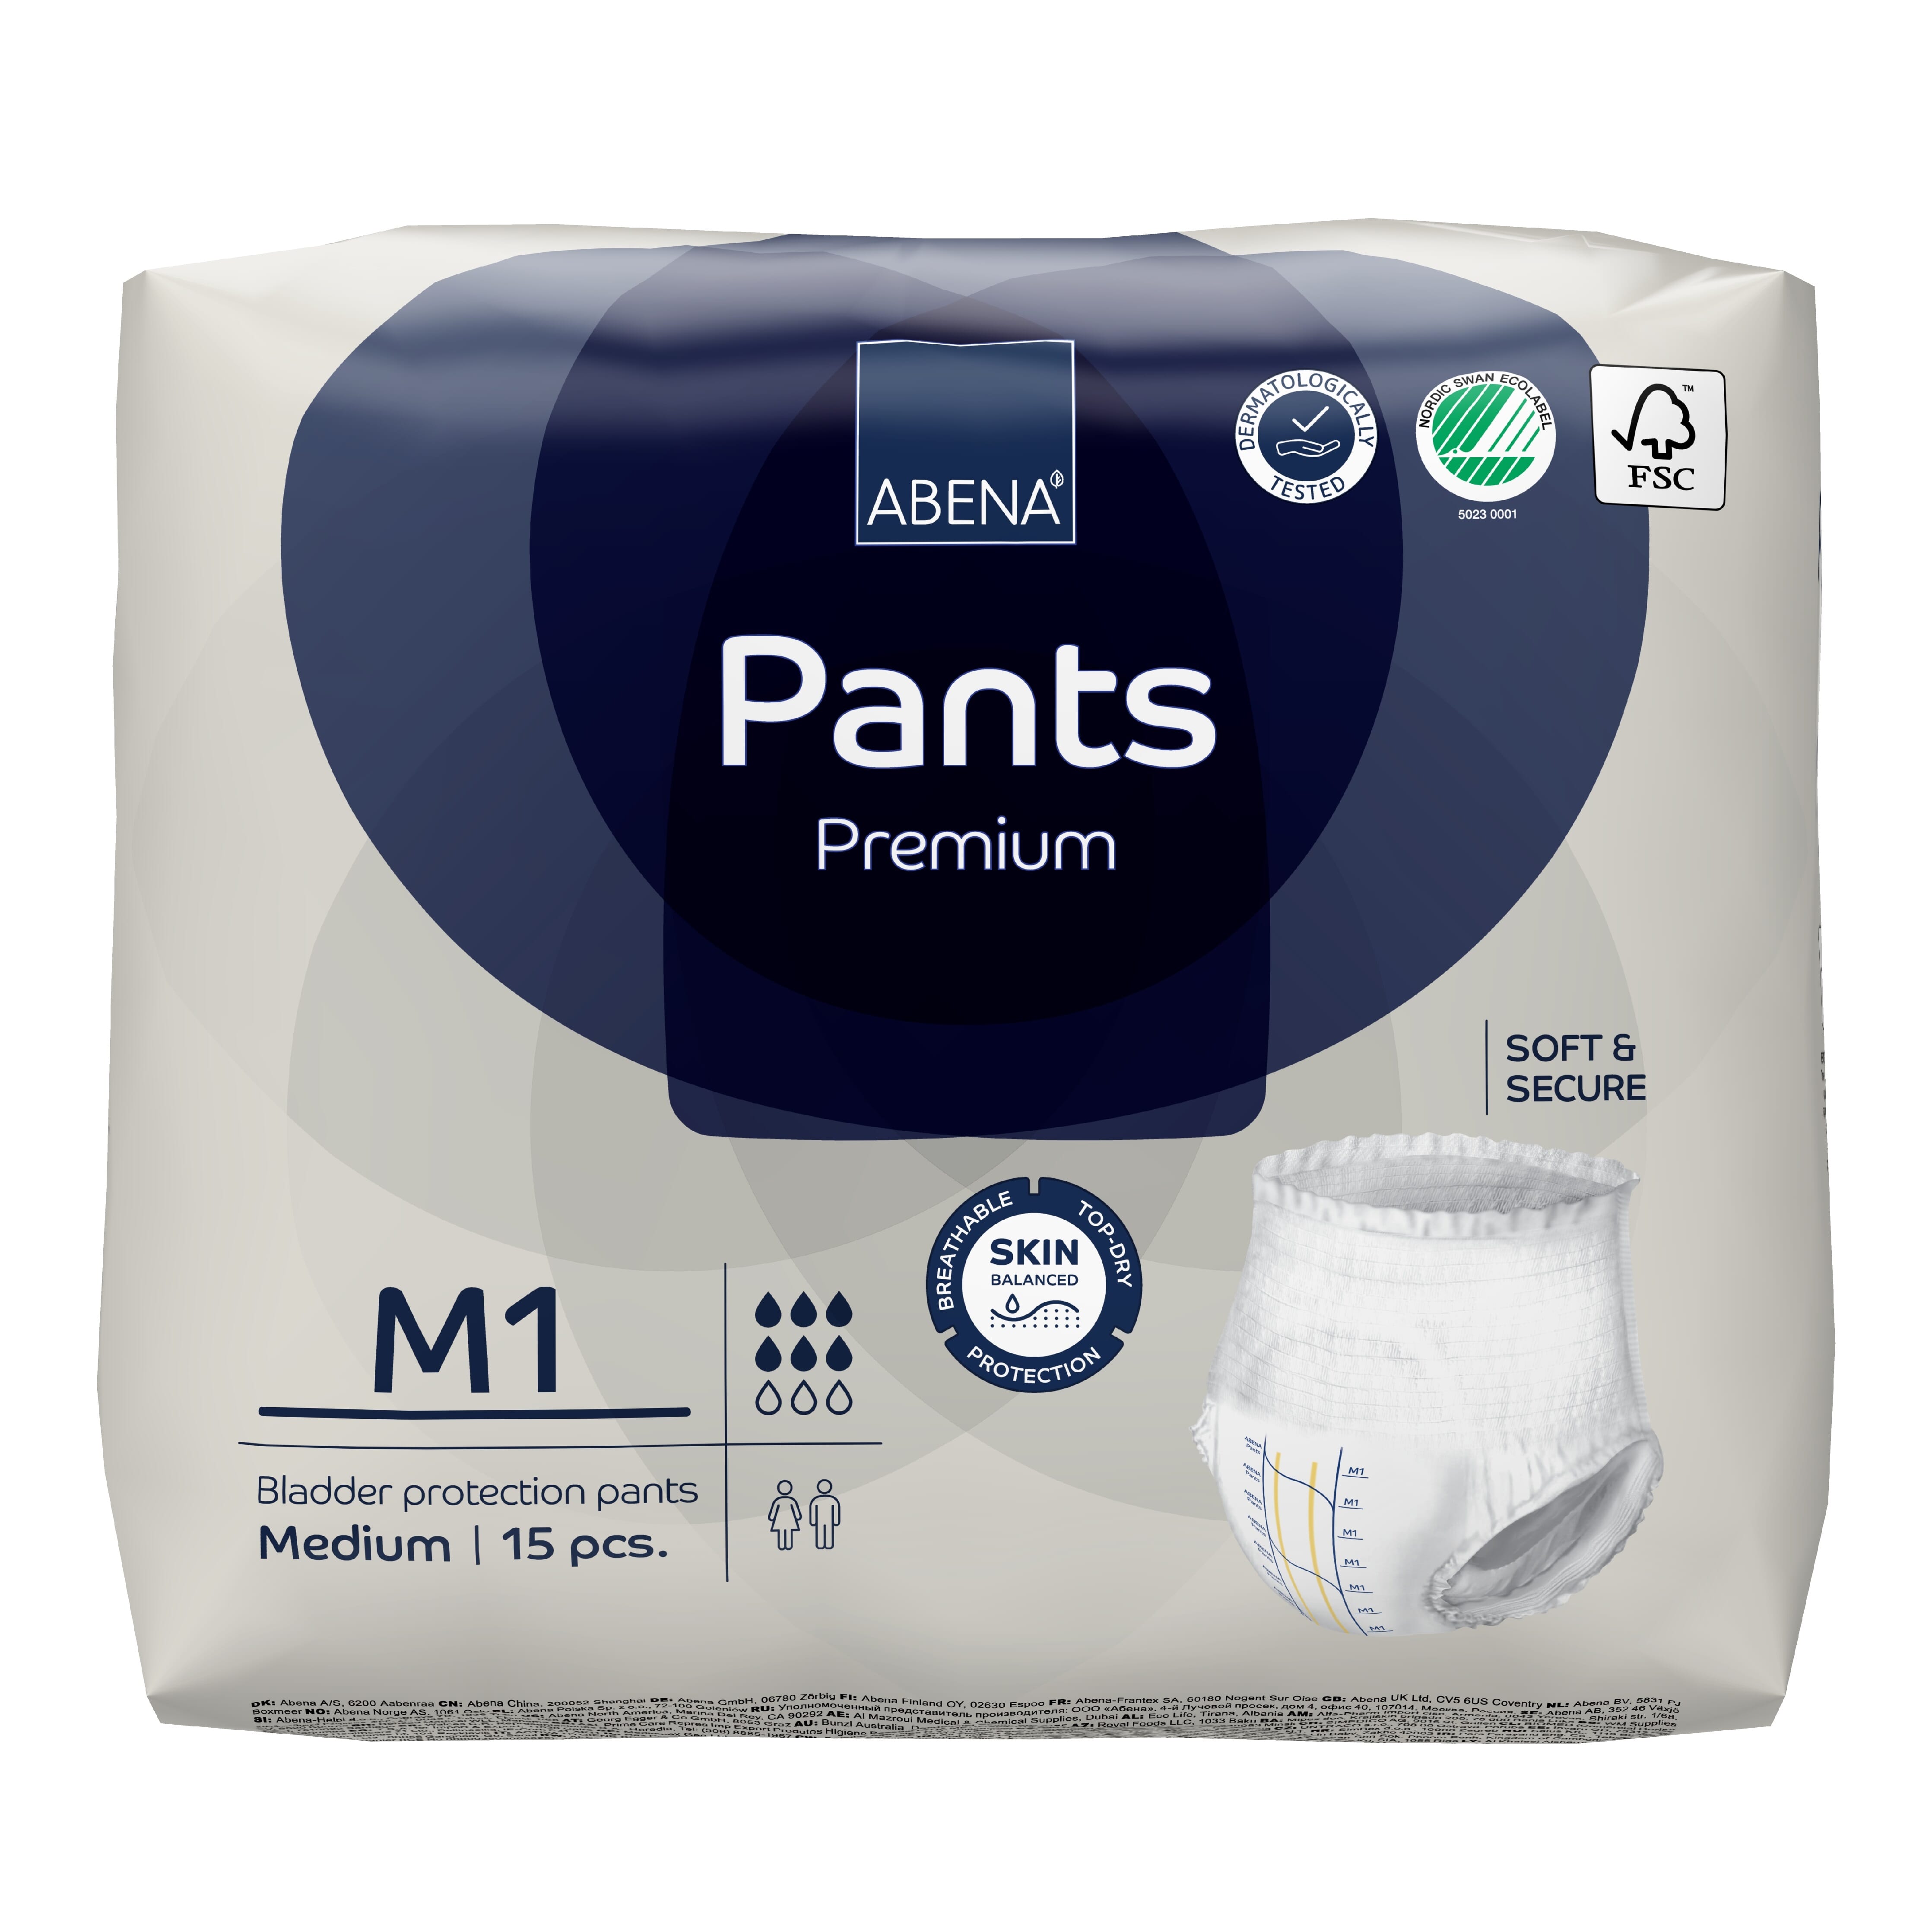 Image of Abena Pants Premium Incontinence Pants - M1